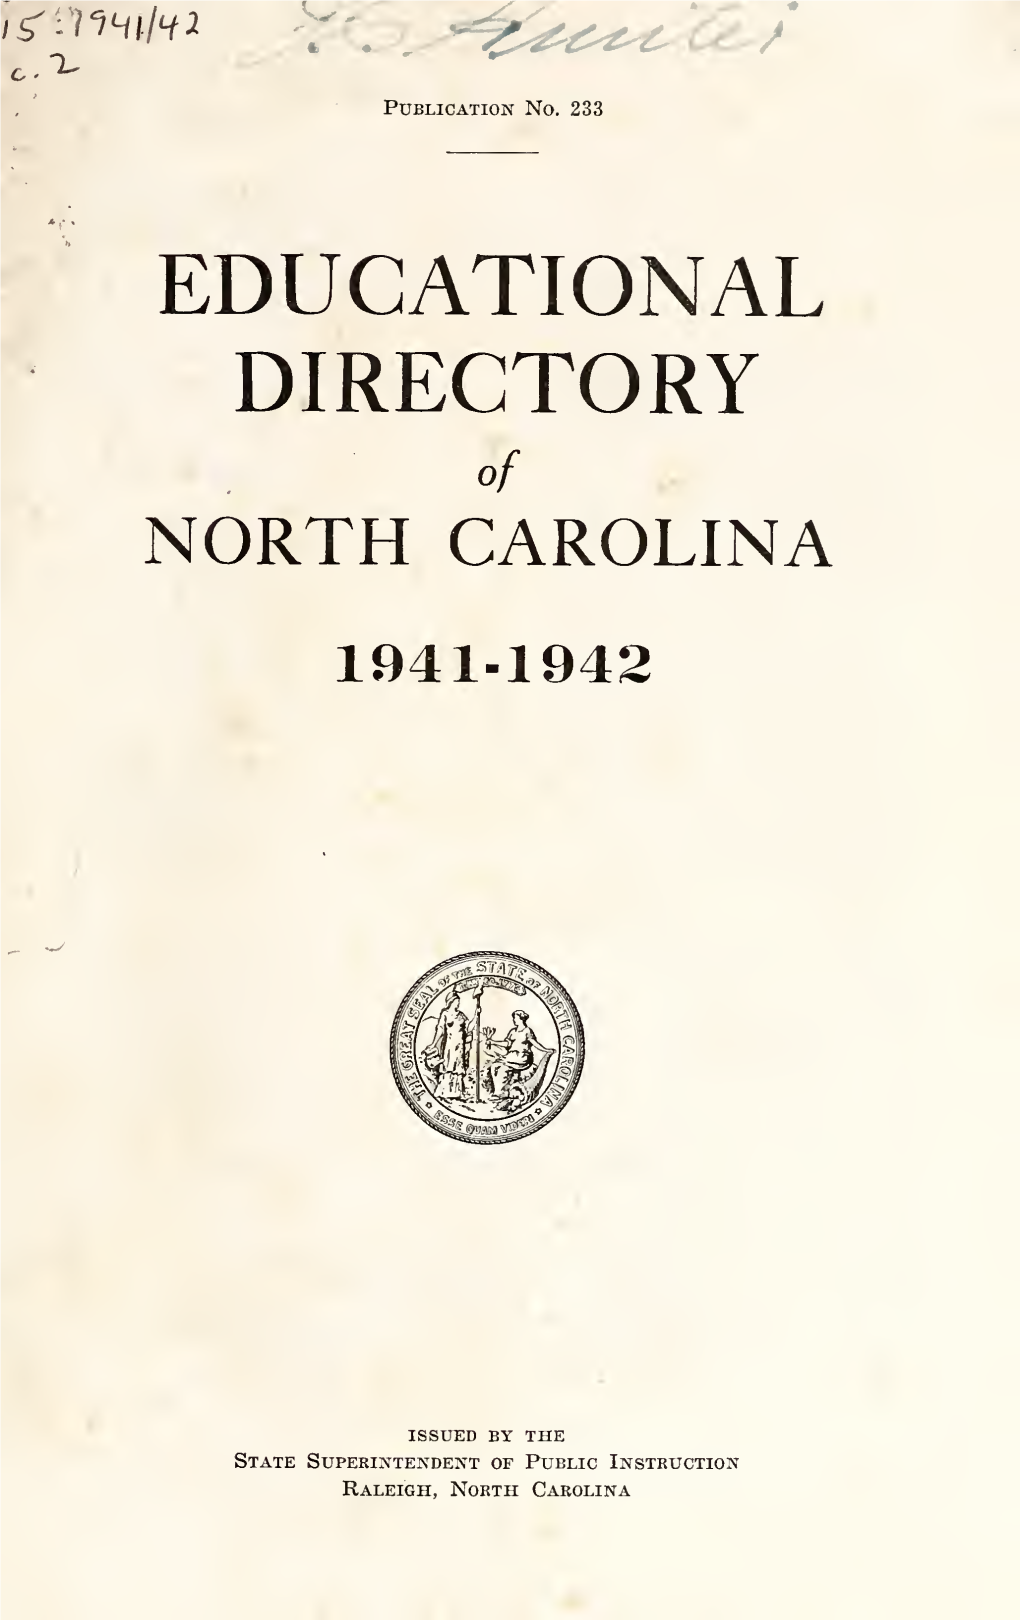 EDUCATIONAL DIRECTORY of NORTH CAROLINA 1941-1942